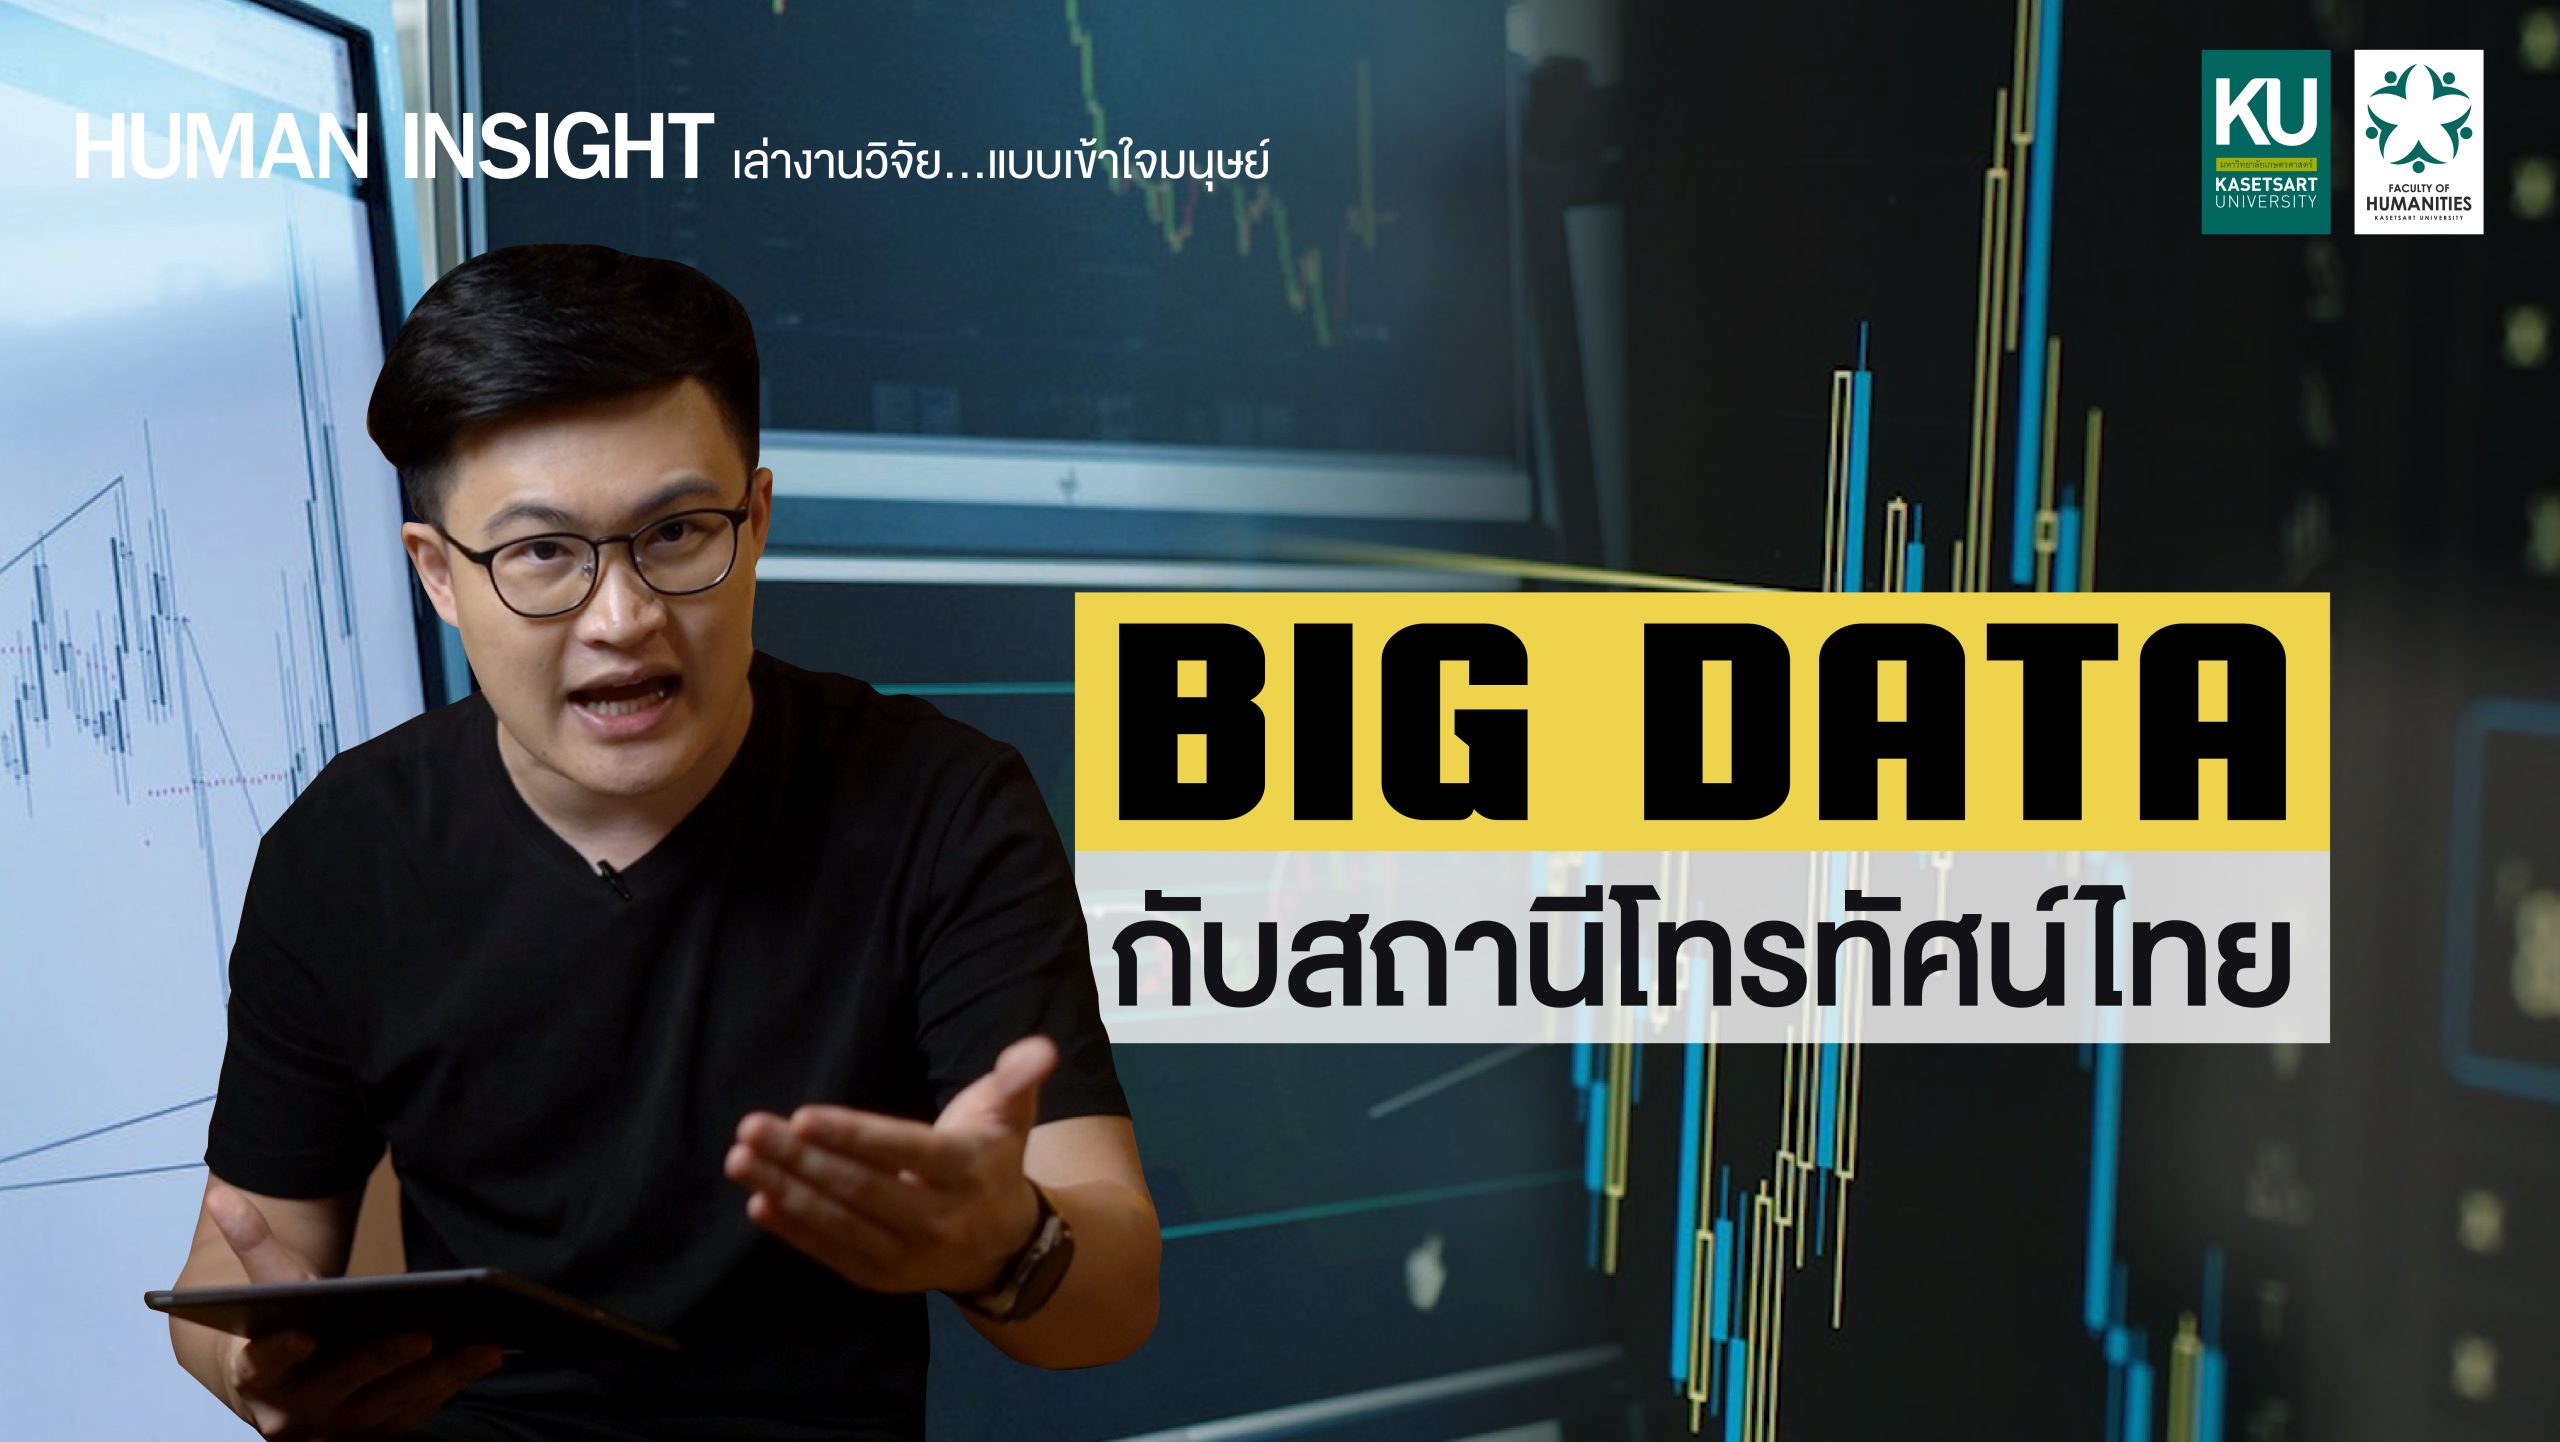 Featured image for ““HUMAN Insight : เล่างานวิจัยแบบเข้าใจมนุษย์” ตอน “Big Data กับ สถานีโทรทัศน์ไทย””